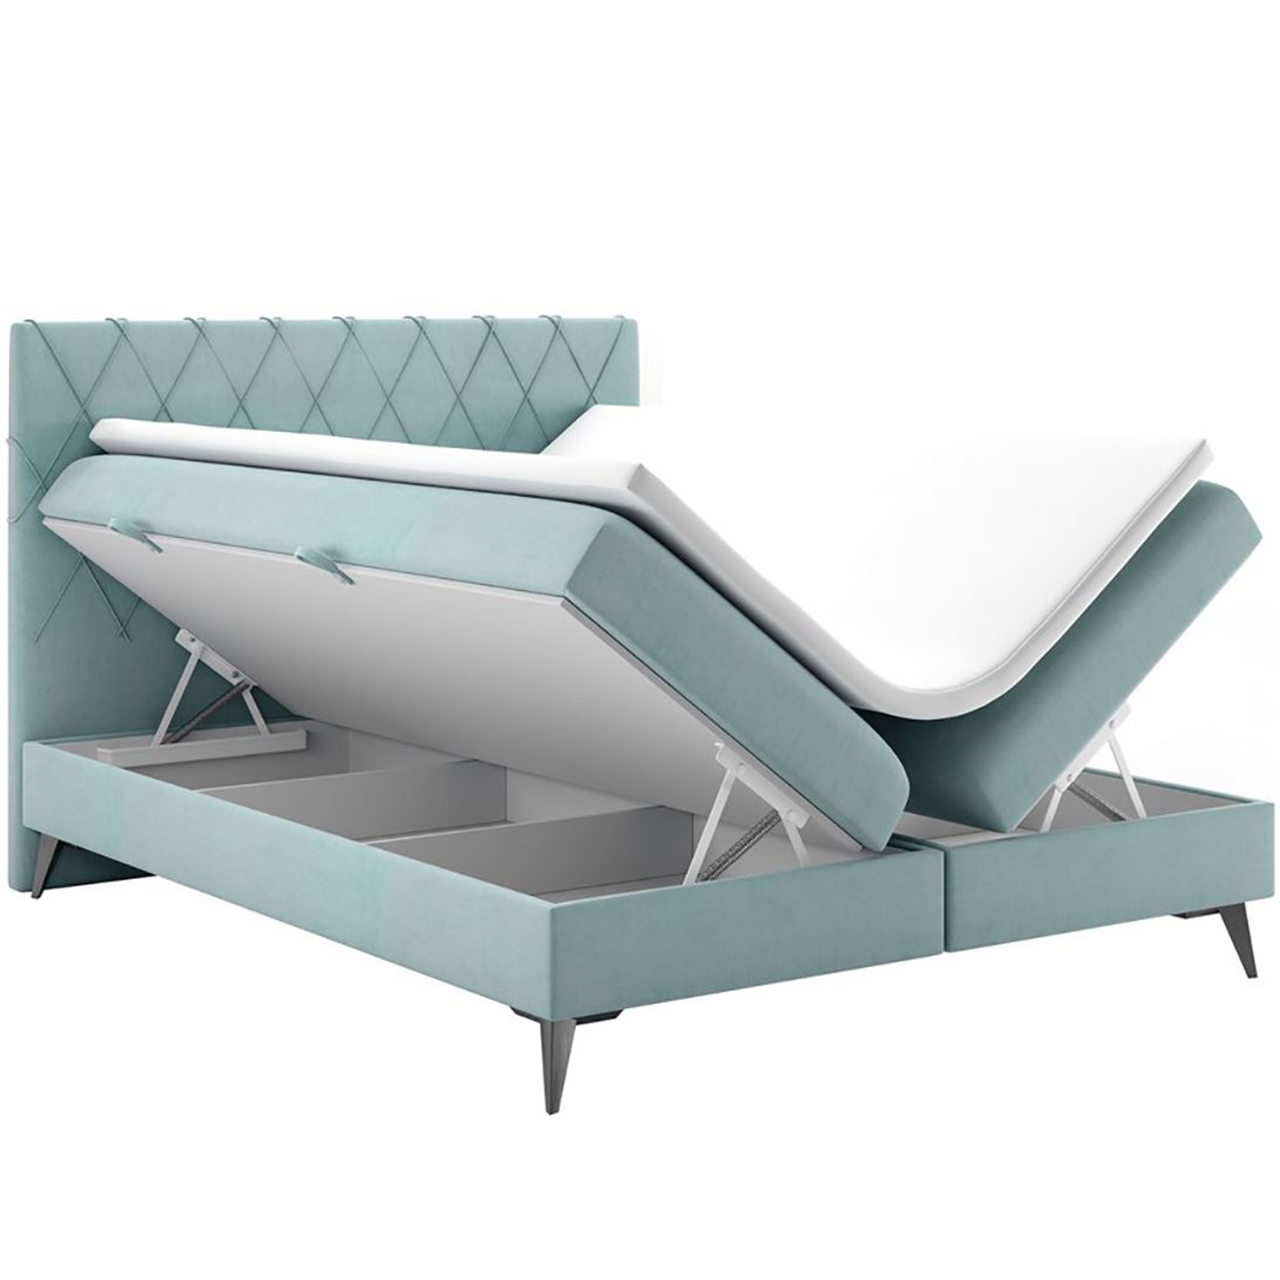 Upholstered bed MINA 180x200 riviera 41